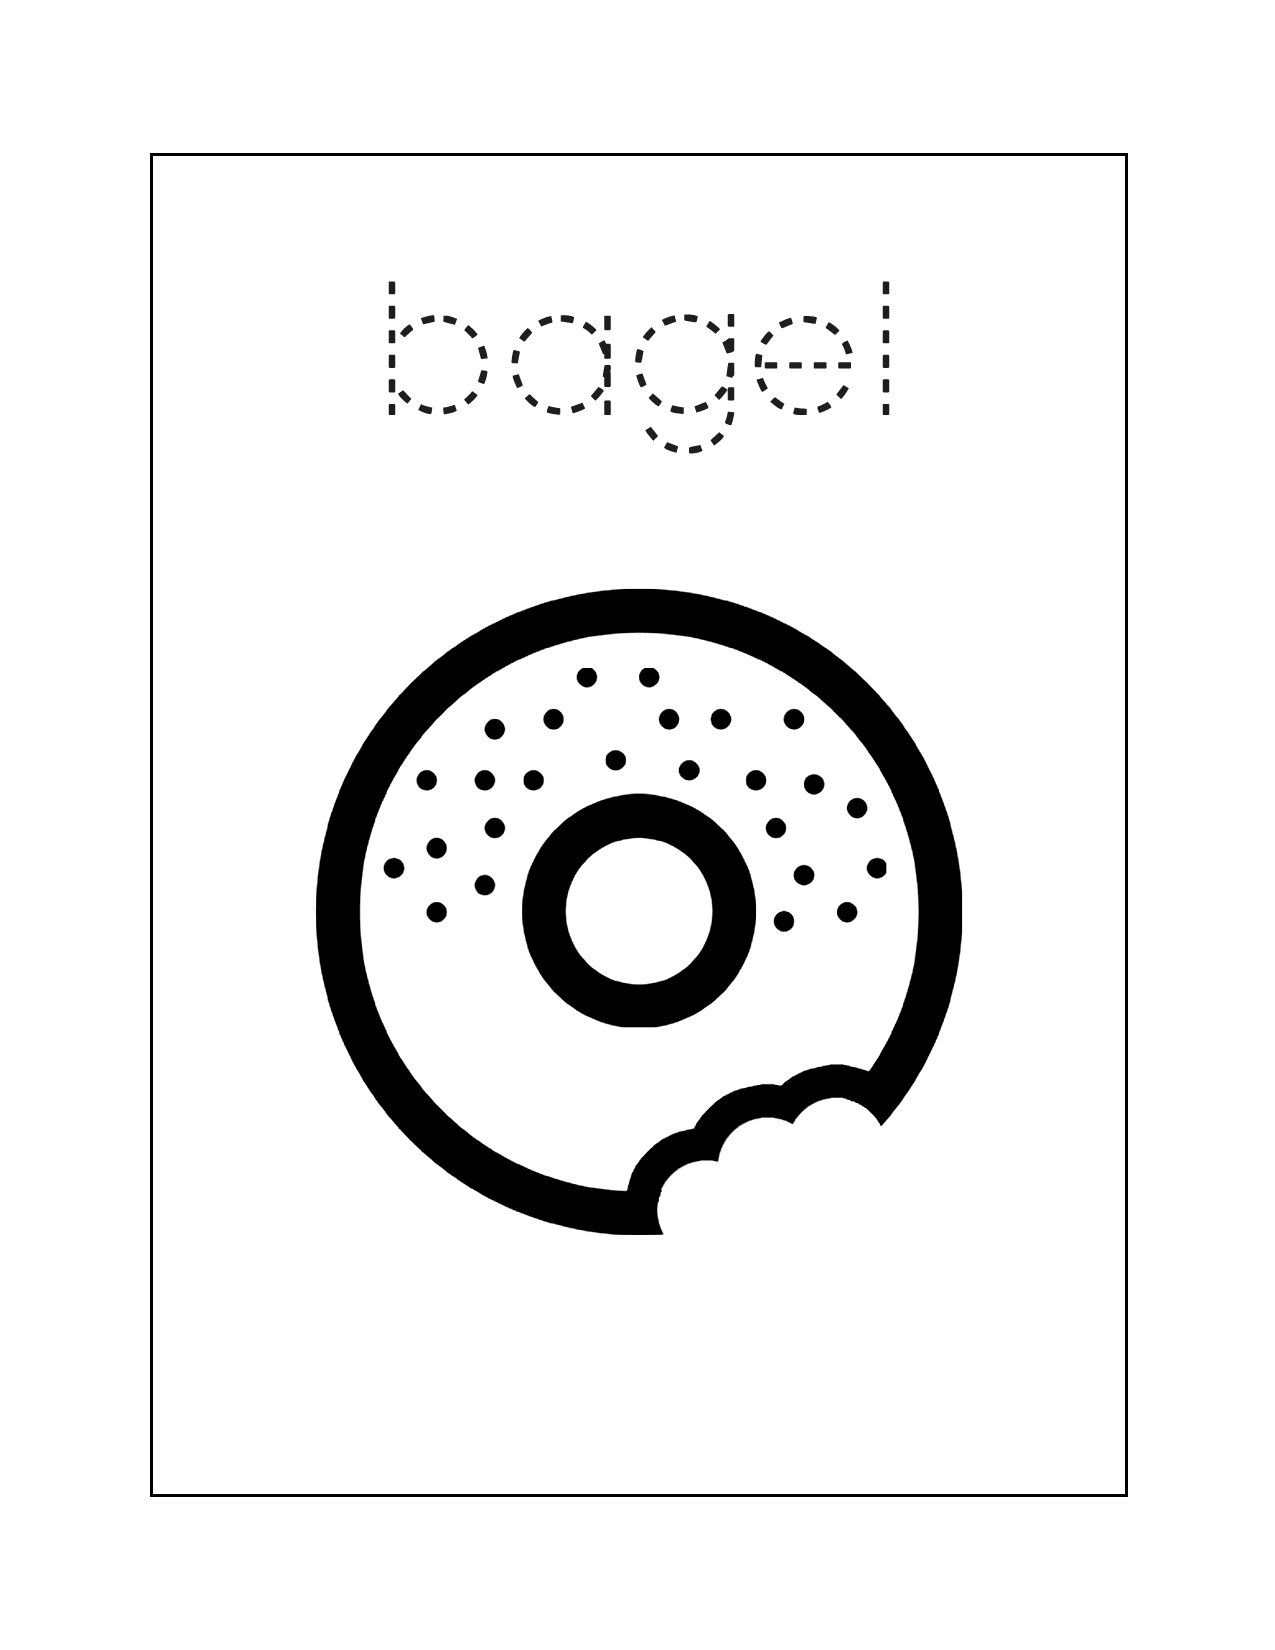 Bagel With A Bite Spelling Worksheet